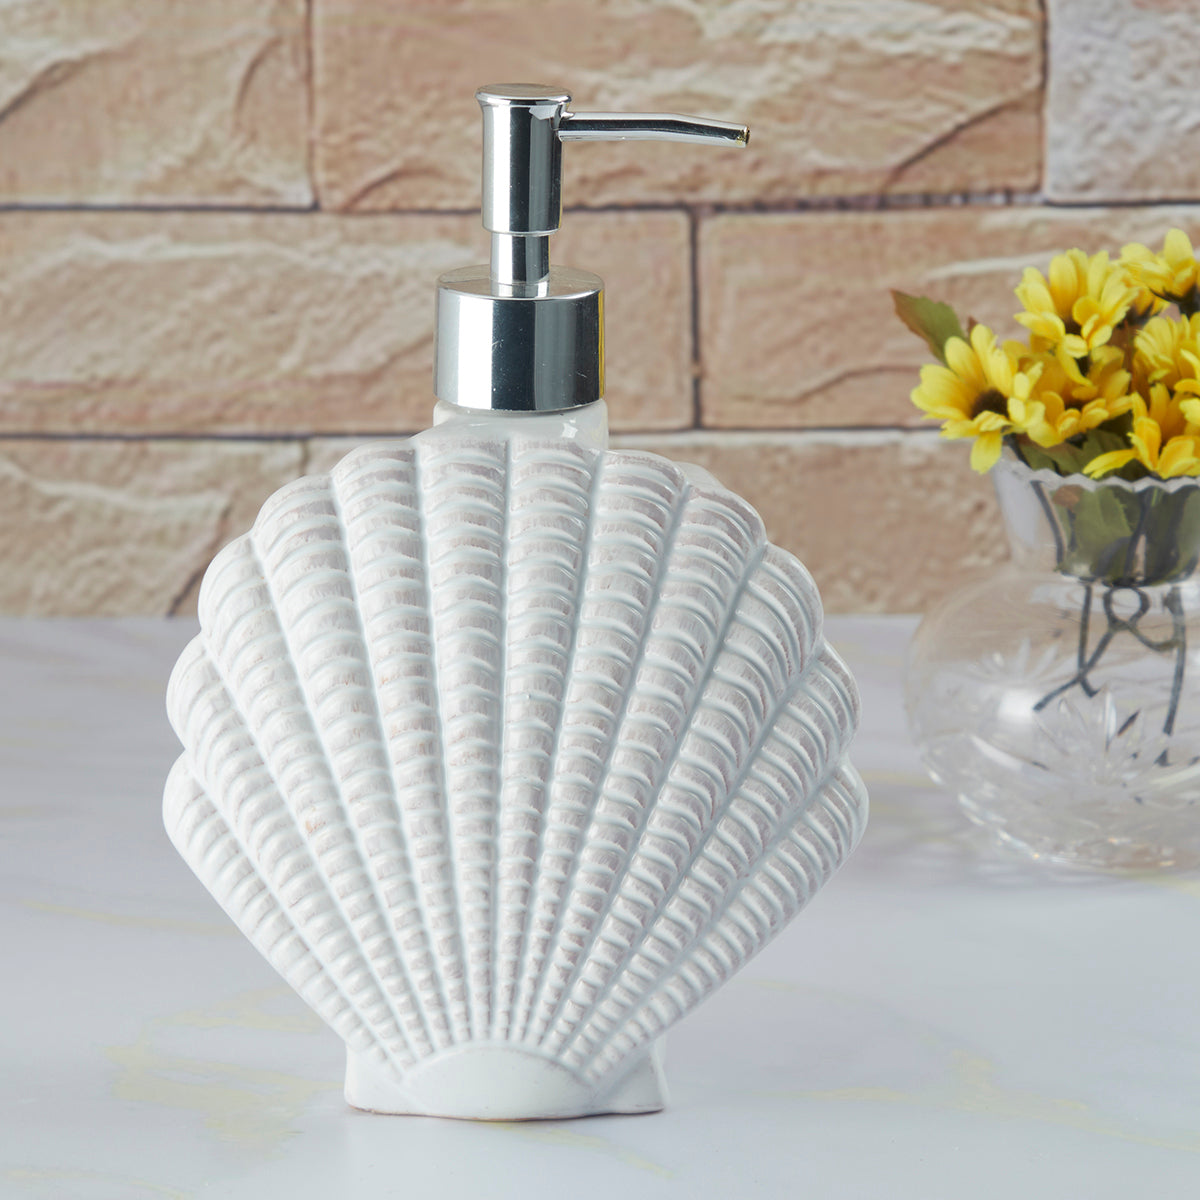 Ceramic Soap Dispenser handwash Pump for Bathroom, Set of 1, White (7964)